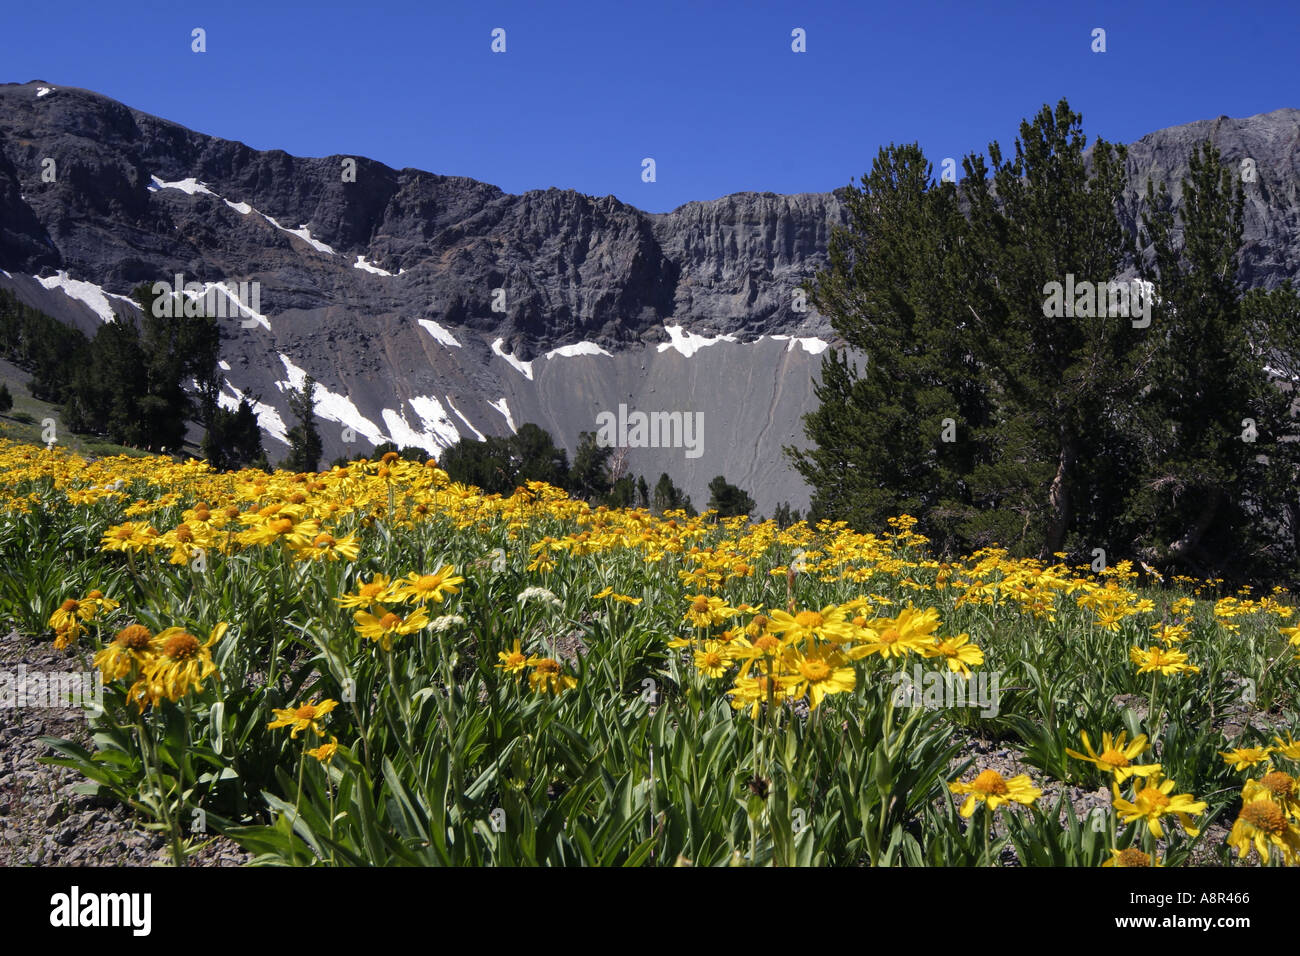 Field of orange sneezeweed (Dugaldia hoopesii) wildflowers in bloom near Sonora Pass, Sierra Nevada Mountains, California, USA. Stock Photo